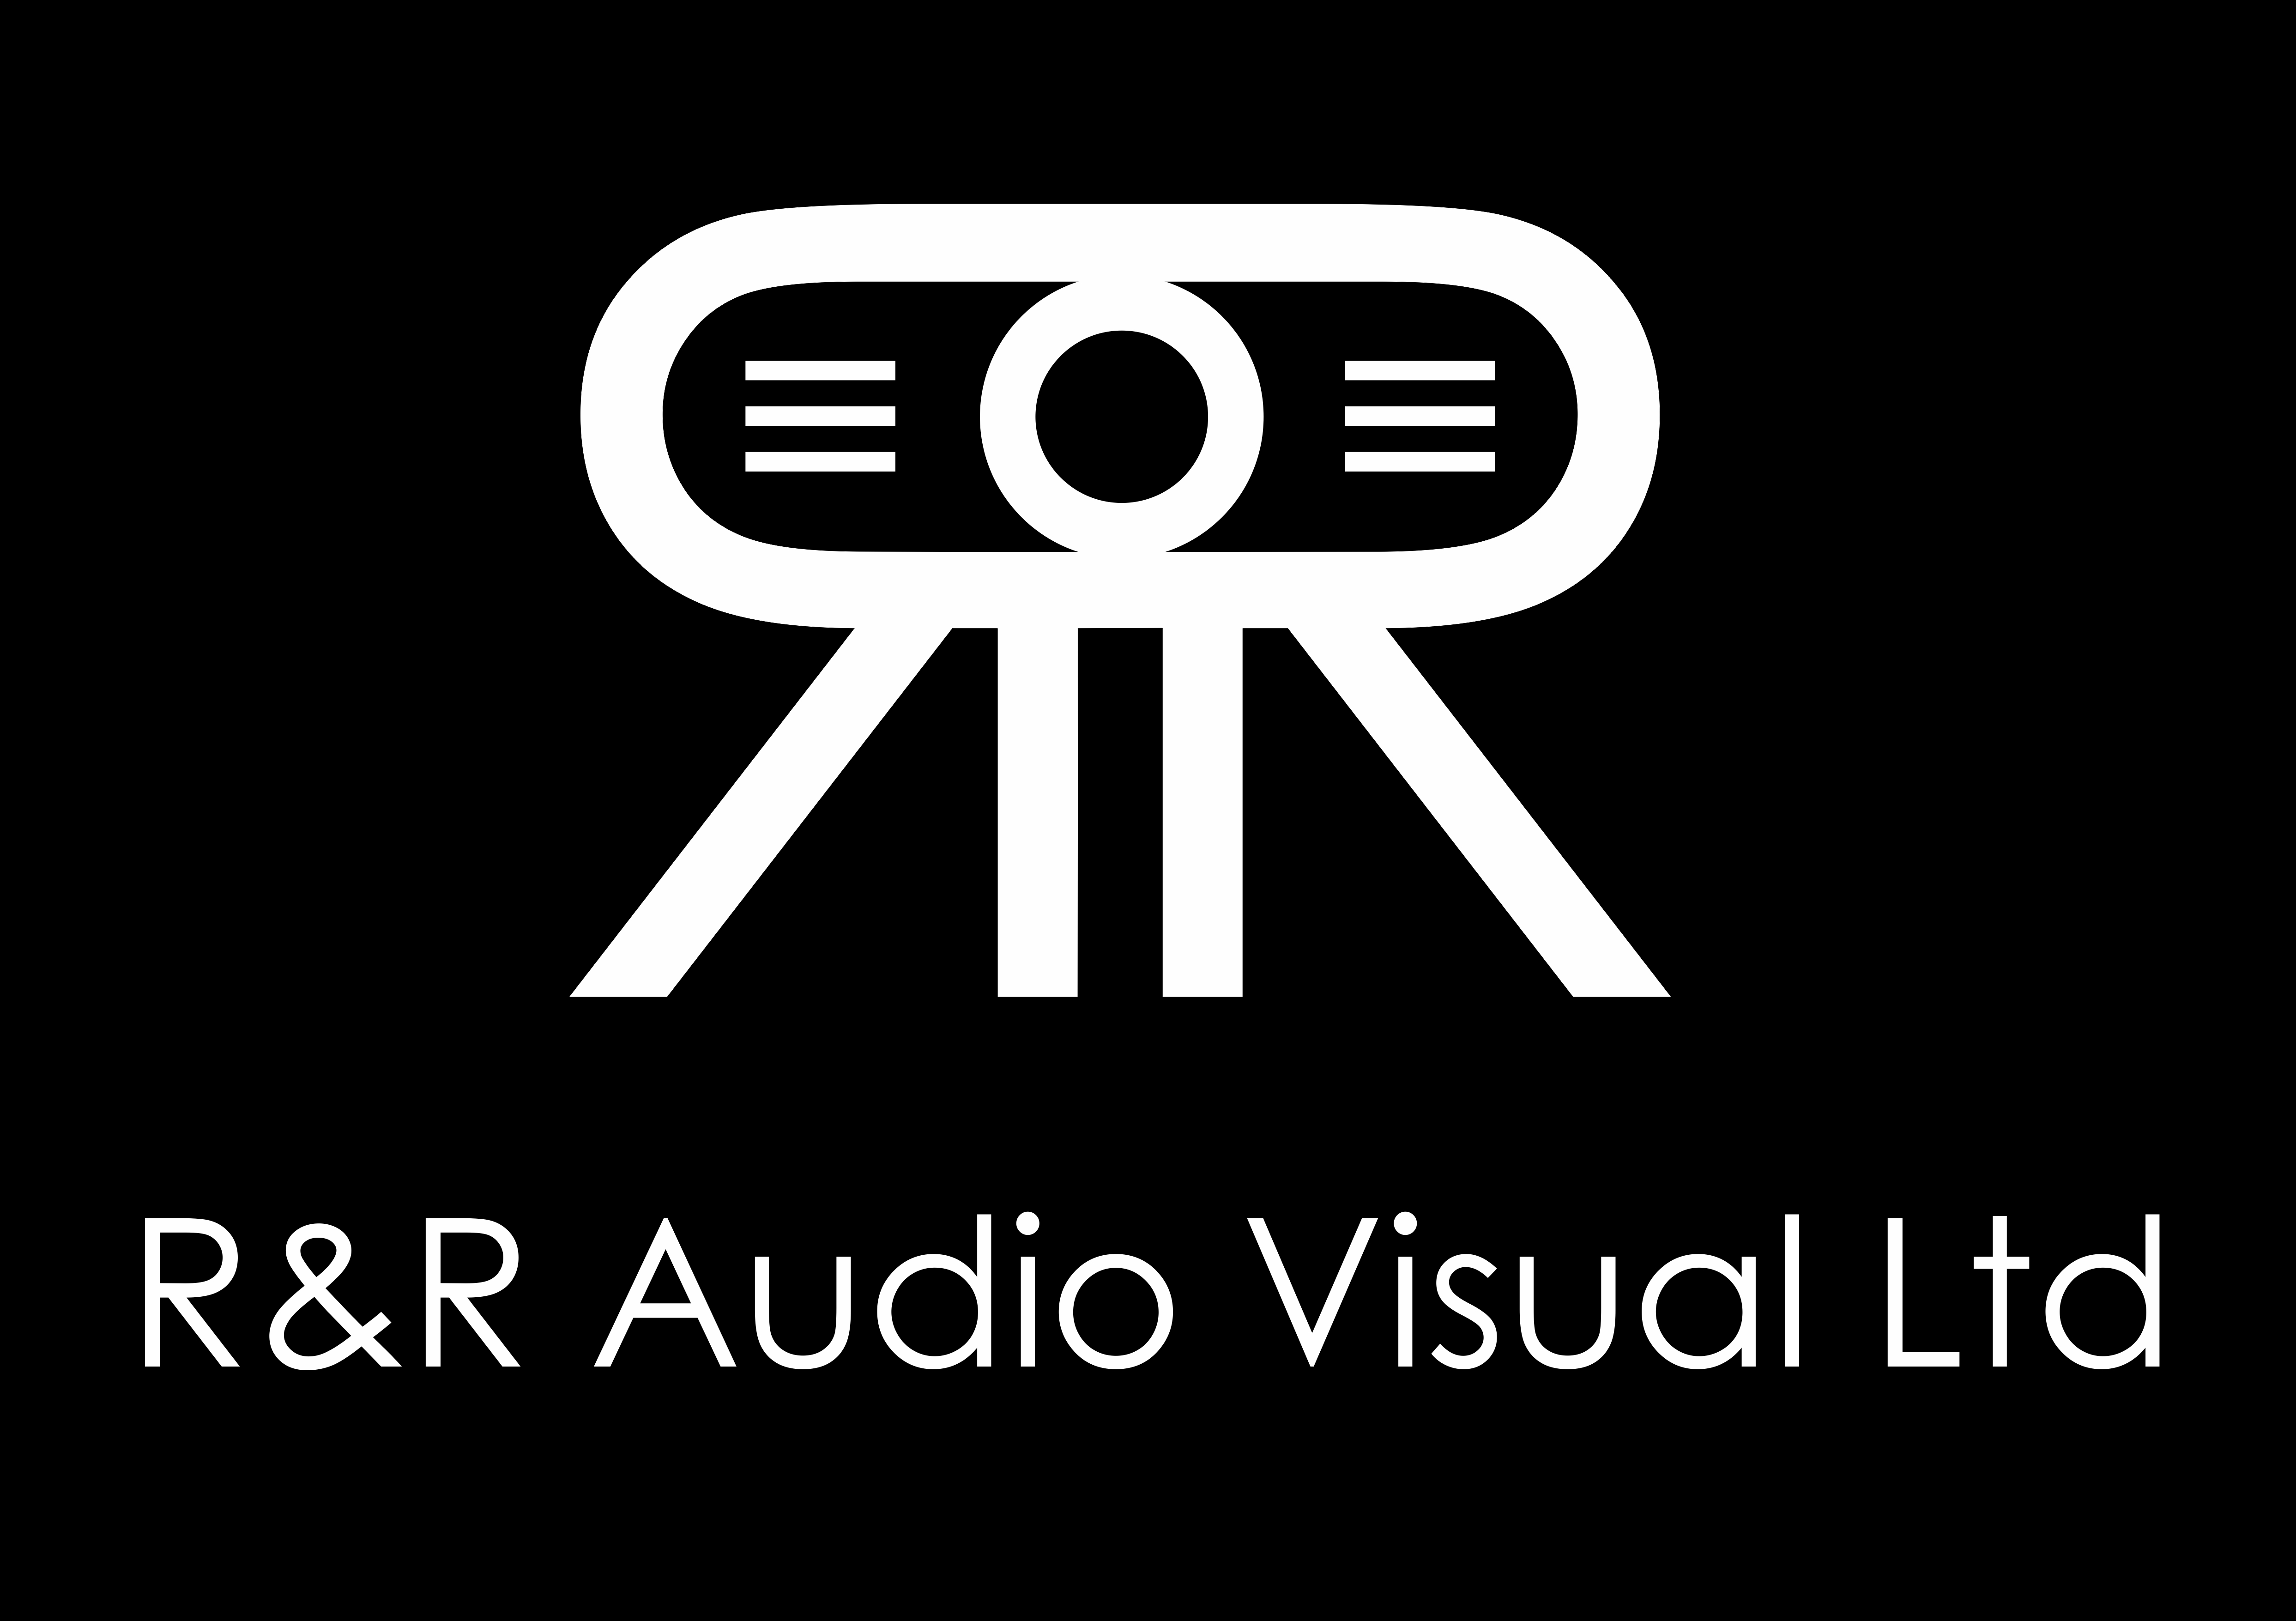 R&R Audio Visual Ltd